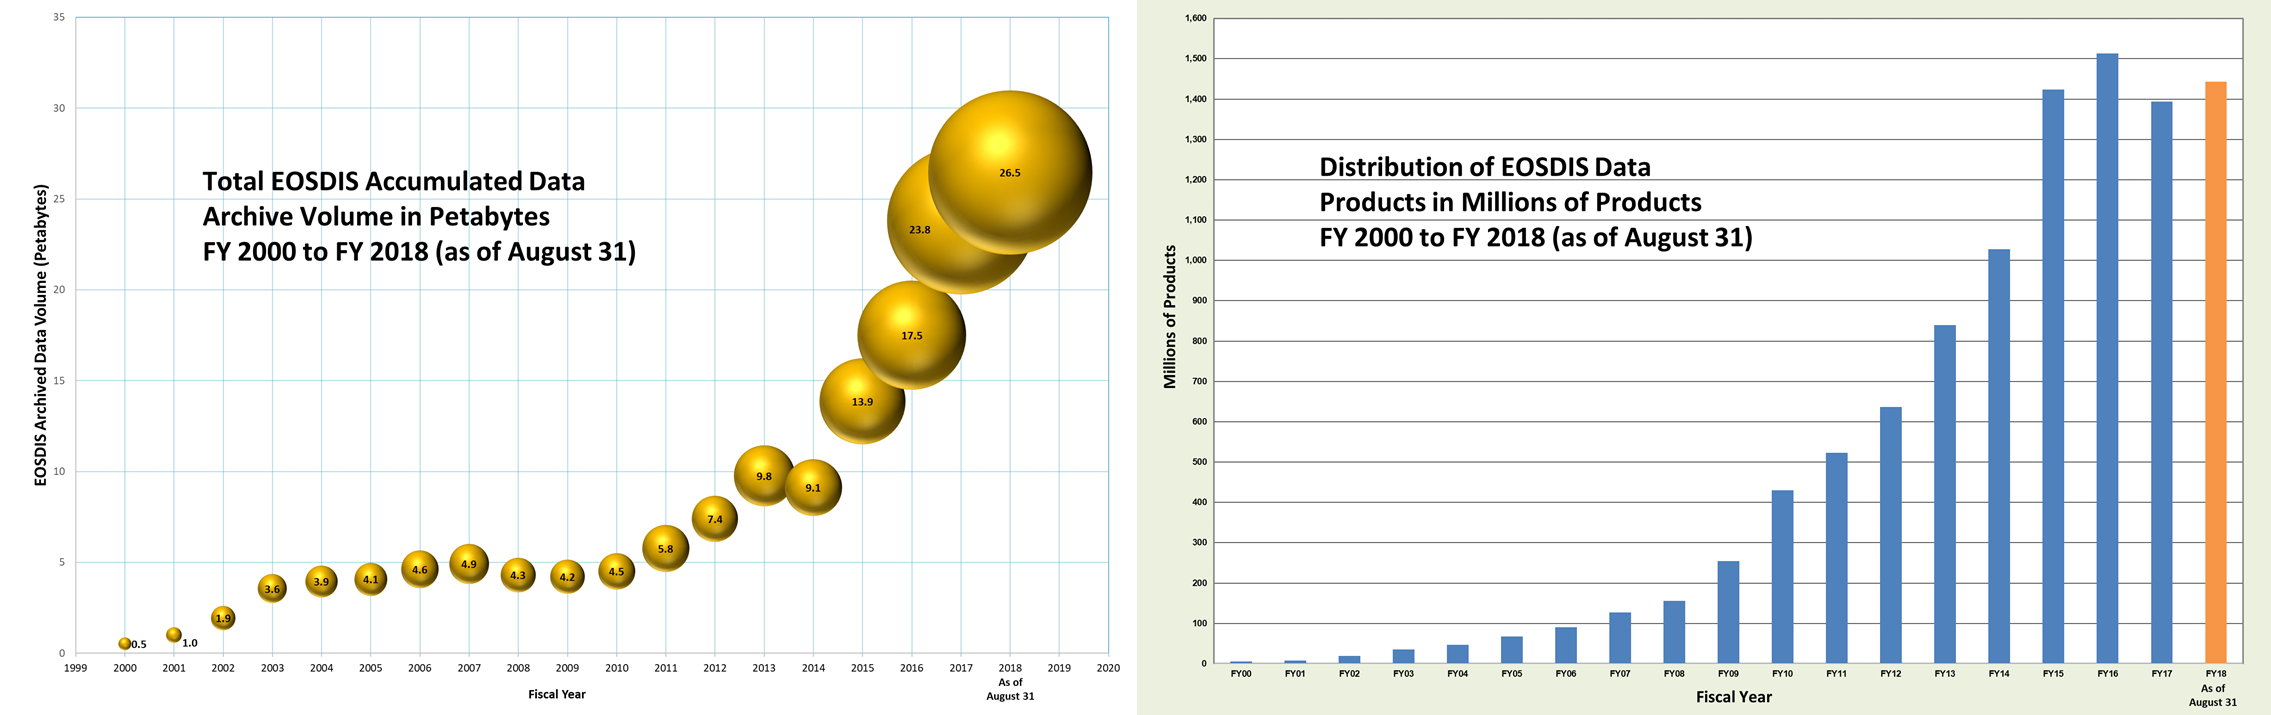 Comparison of EOSDIS data volume and product distribution